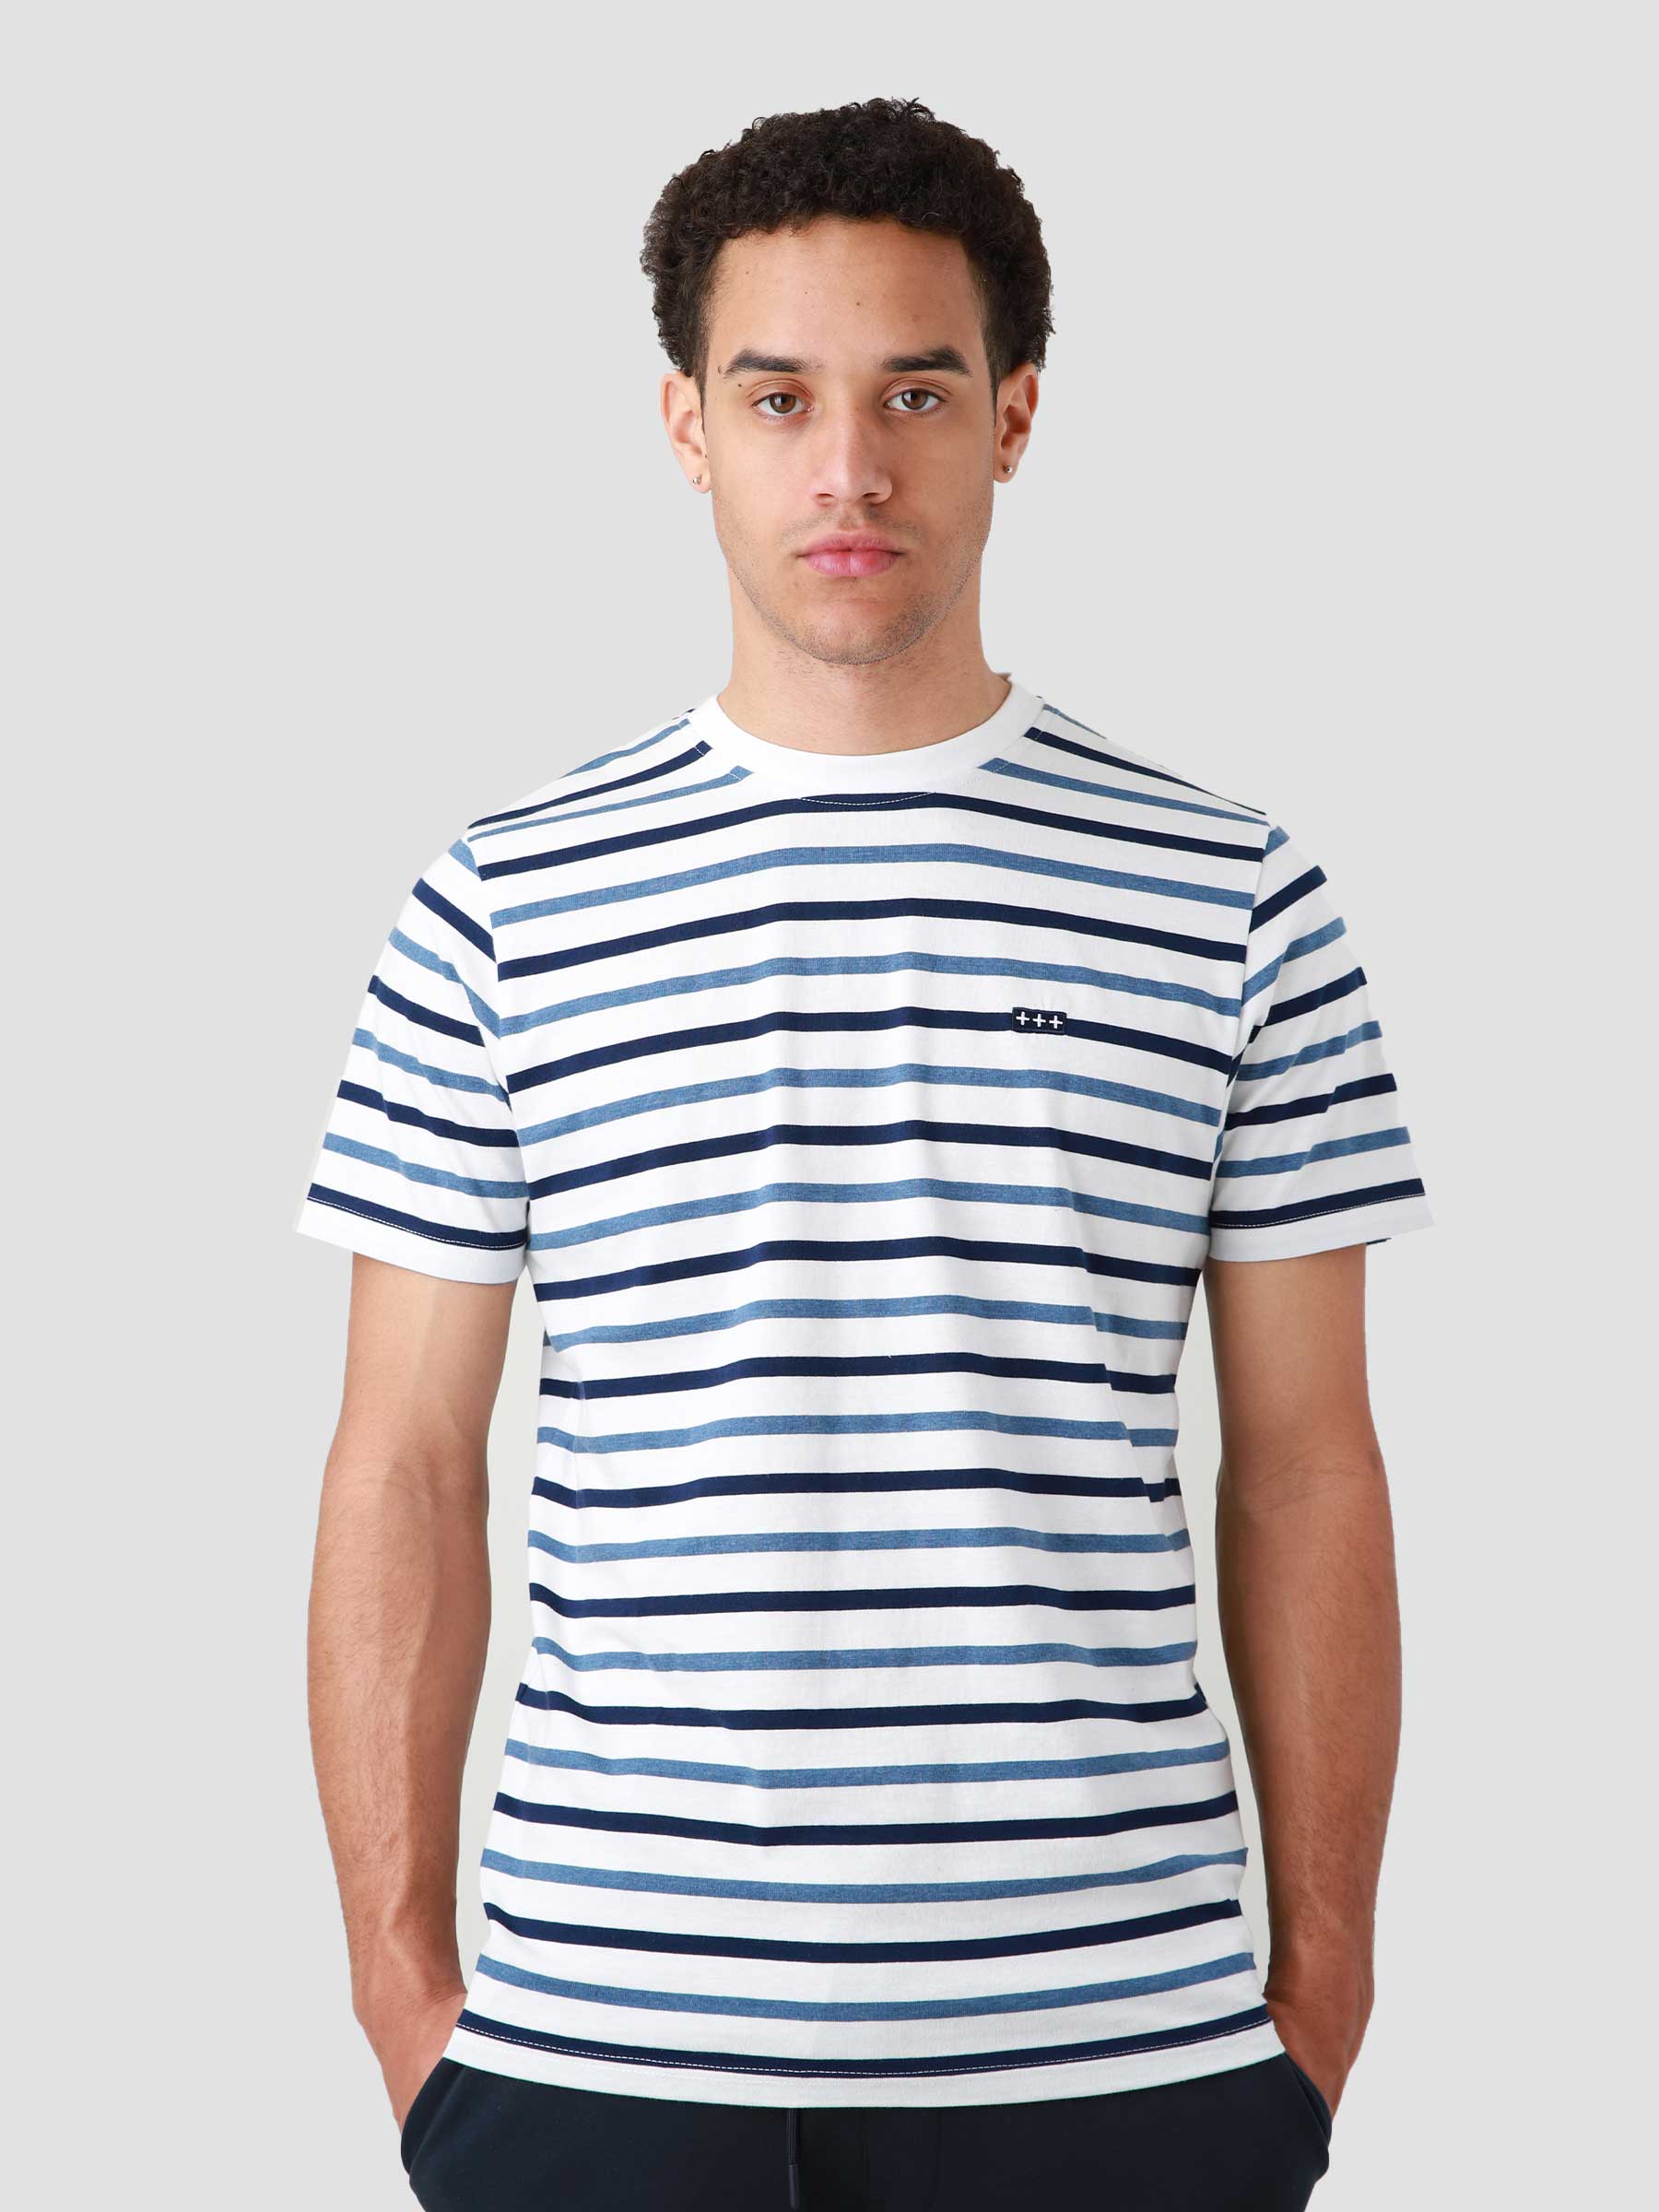 Quality Blanks QB601 Stripe T-shirt White Navy - Freshcotton